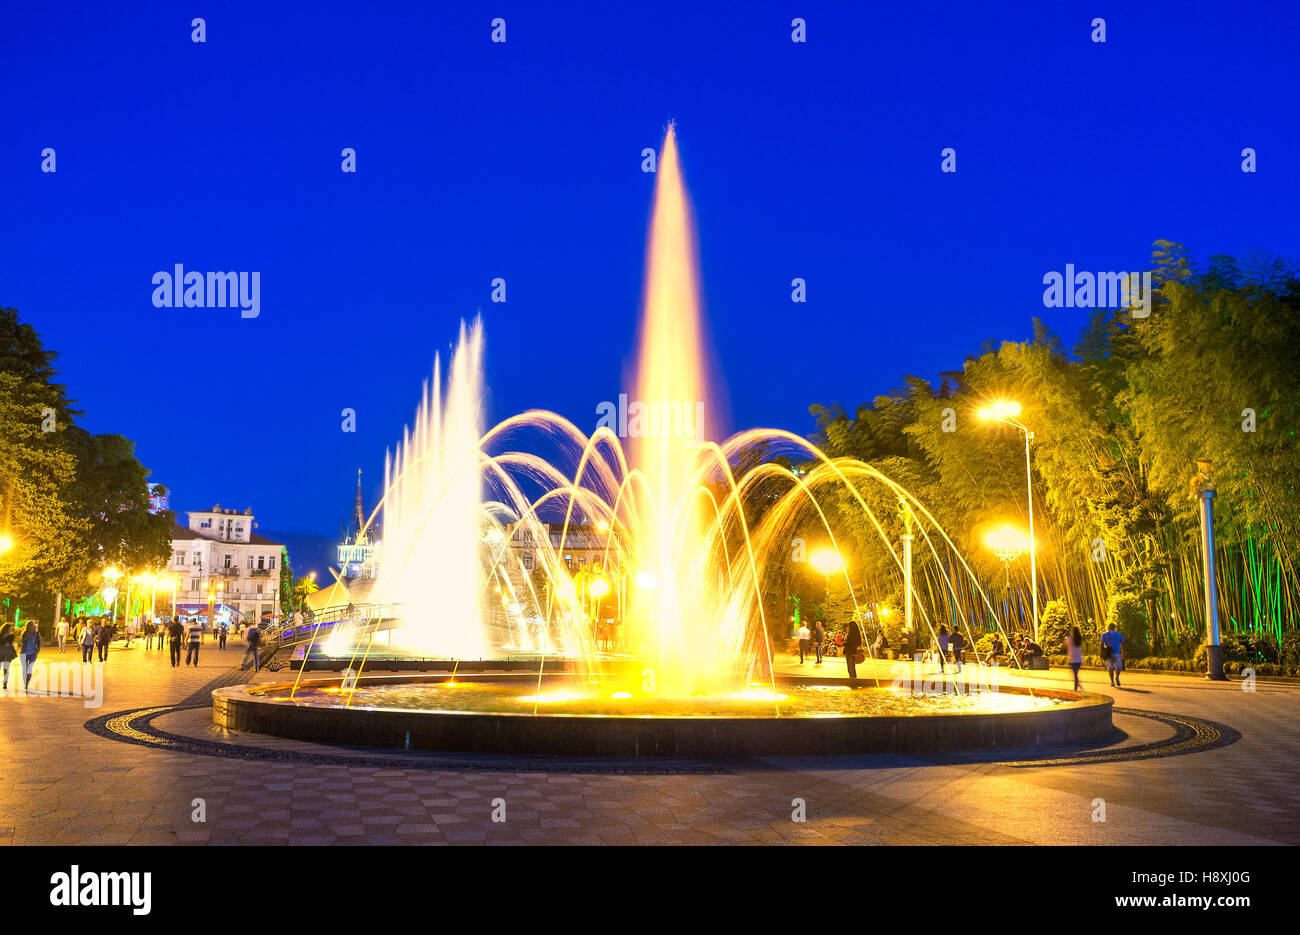 The beautiful show of dancing fountains in Batumi Boulevard, Georgia. Stock Photo